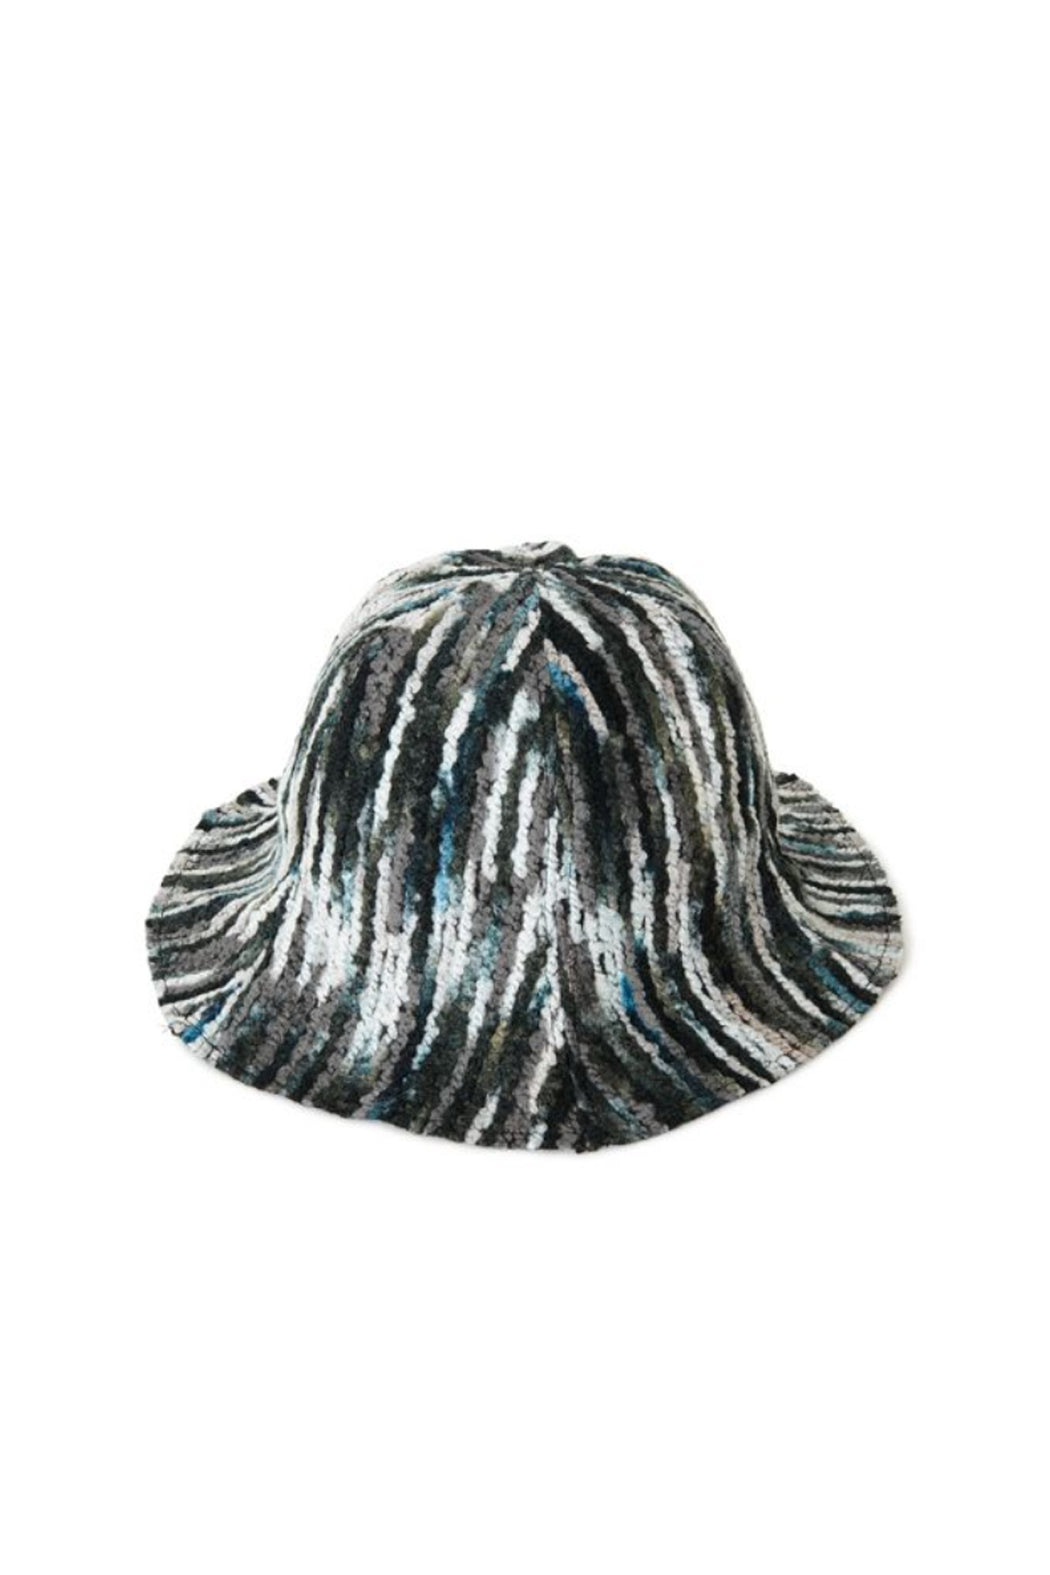 Stripe Yarn Hat - Black